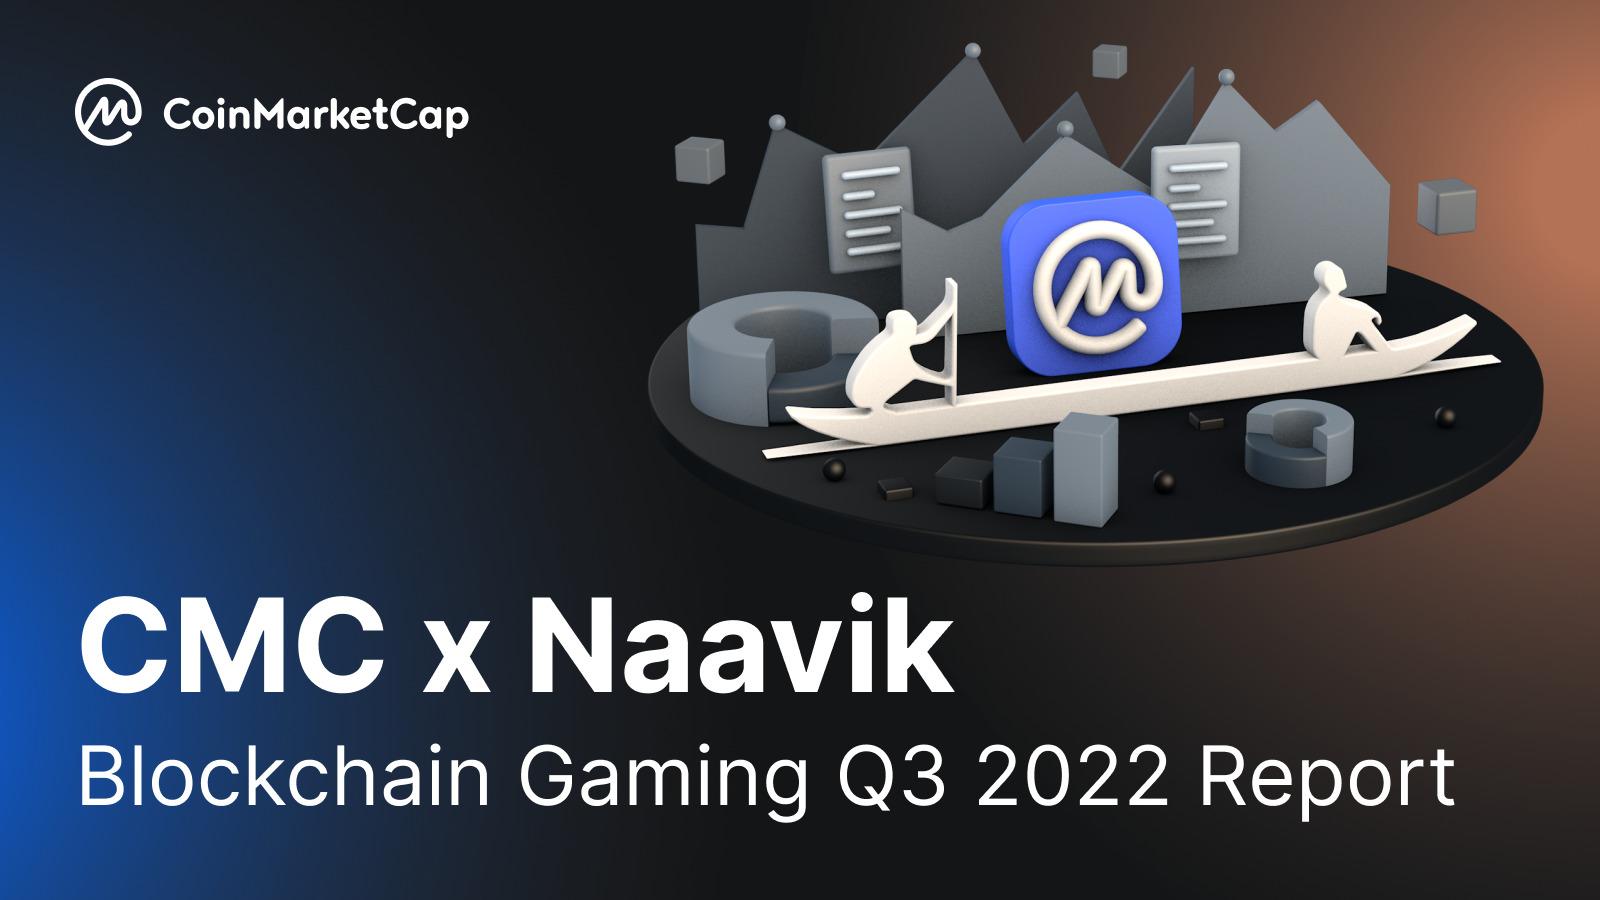 bao-cao-thi-truong-game-blockchain-nam-2022-coinmarketcap-x-naavik